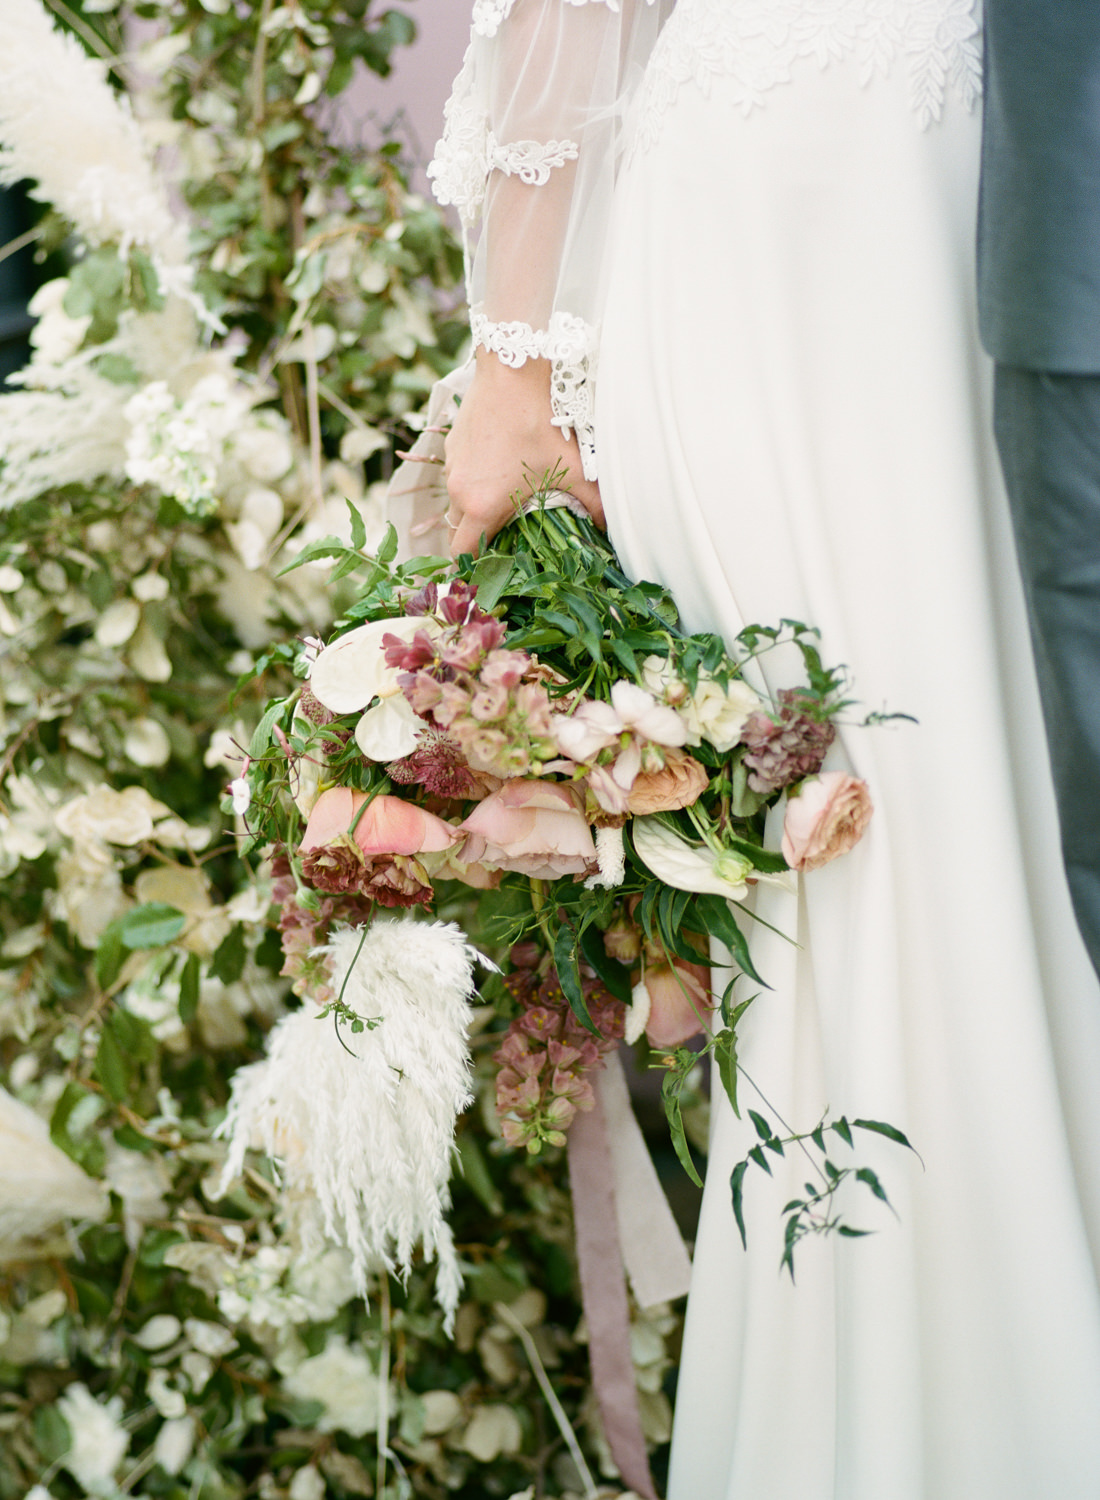 Mauve and pink bridal bouquet by Magnolia Belle Floral, Claire Pettibone wedding gown, St. Louis Fine Art Film Wedding Photographer Erica Robnett Photography